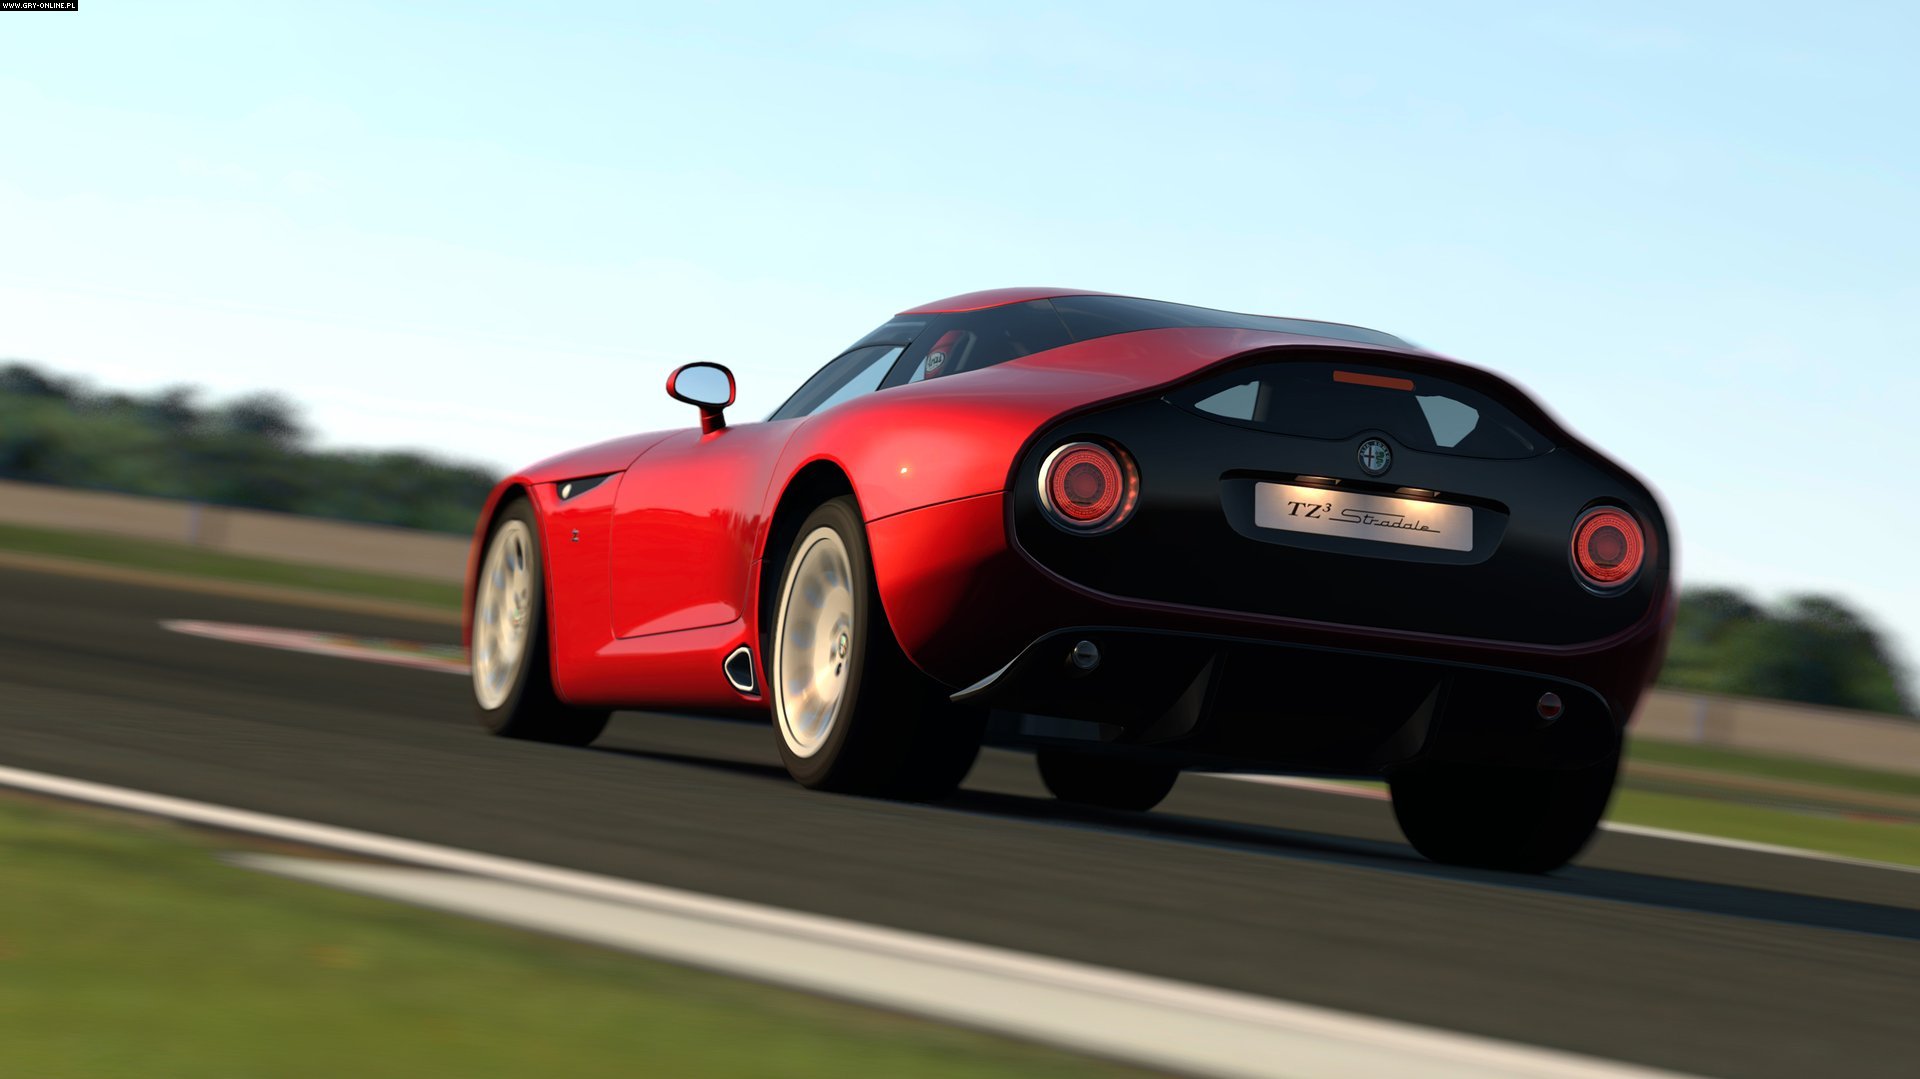 Download mobile wallpaper Gran Turismo 6, Gran Turismo, Video Game for free.